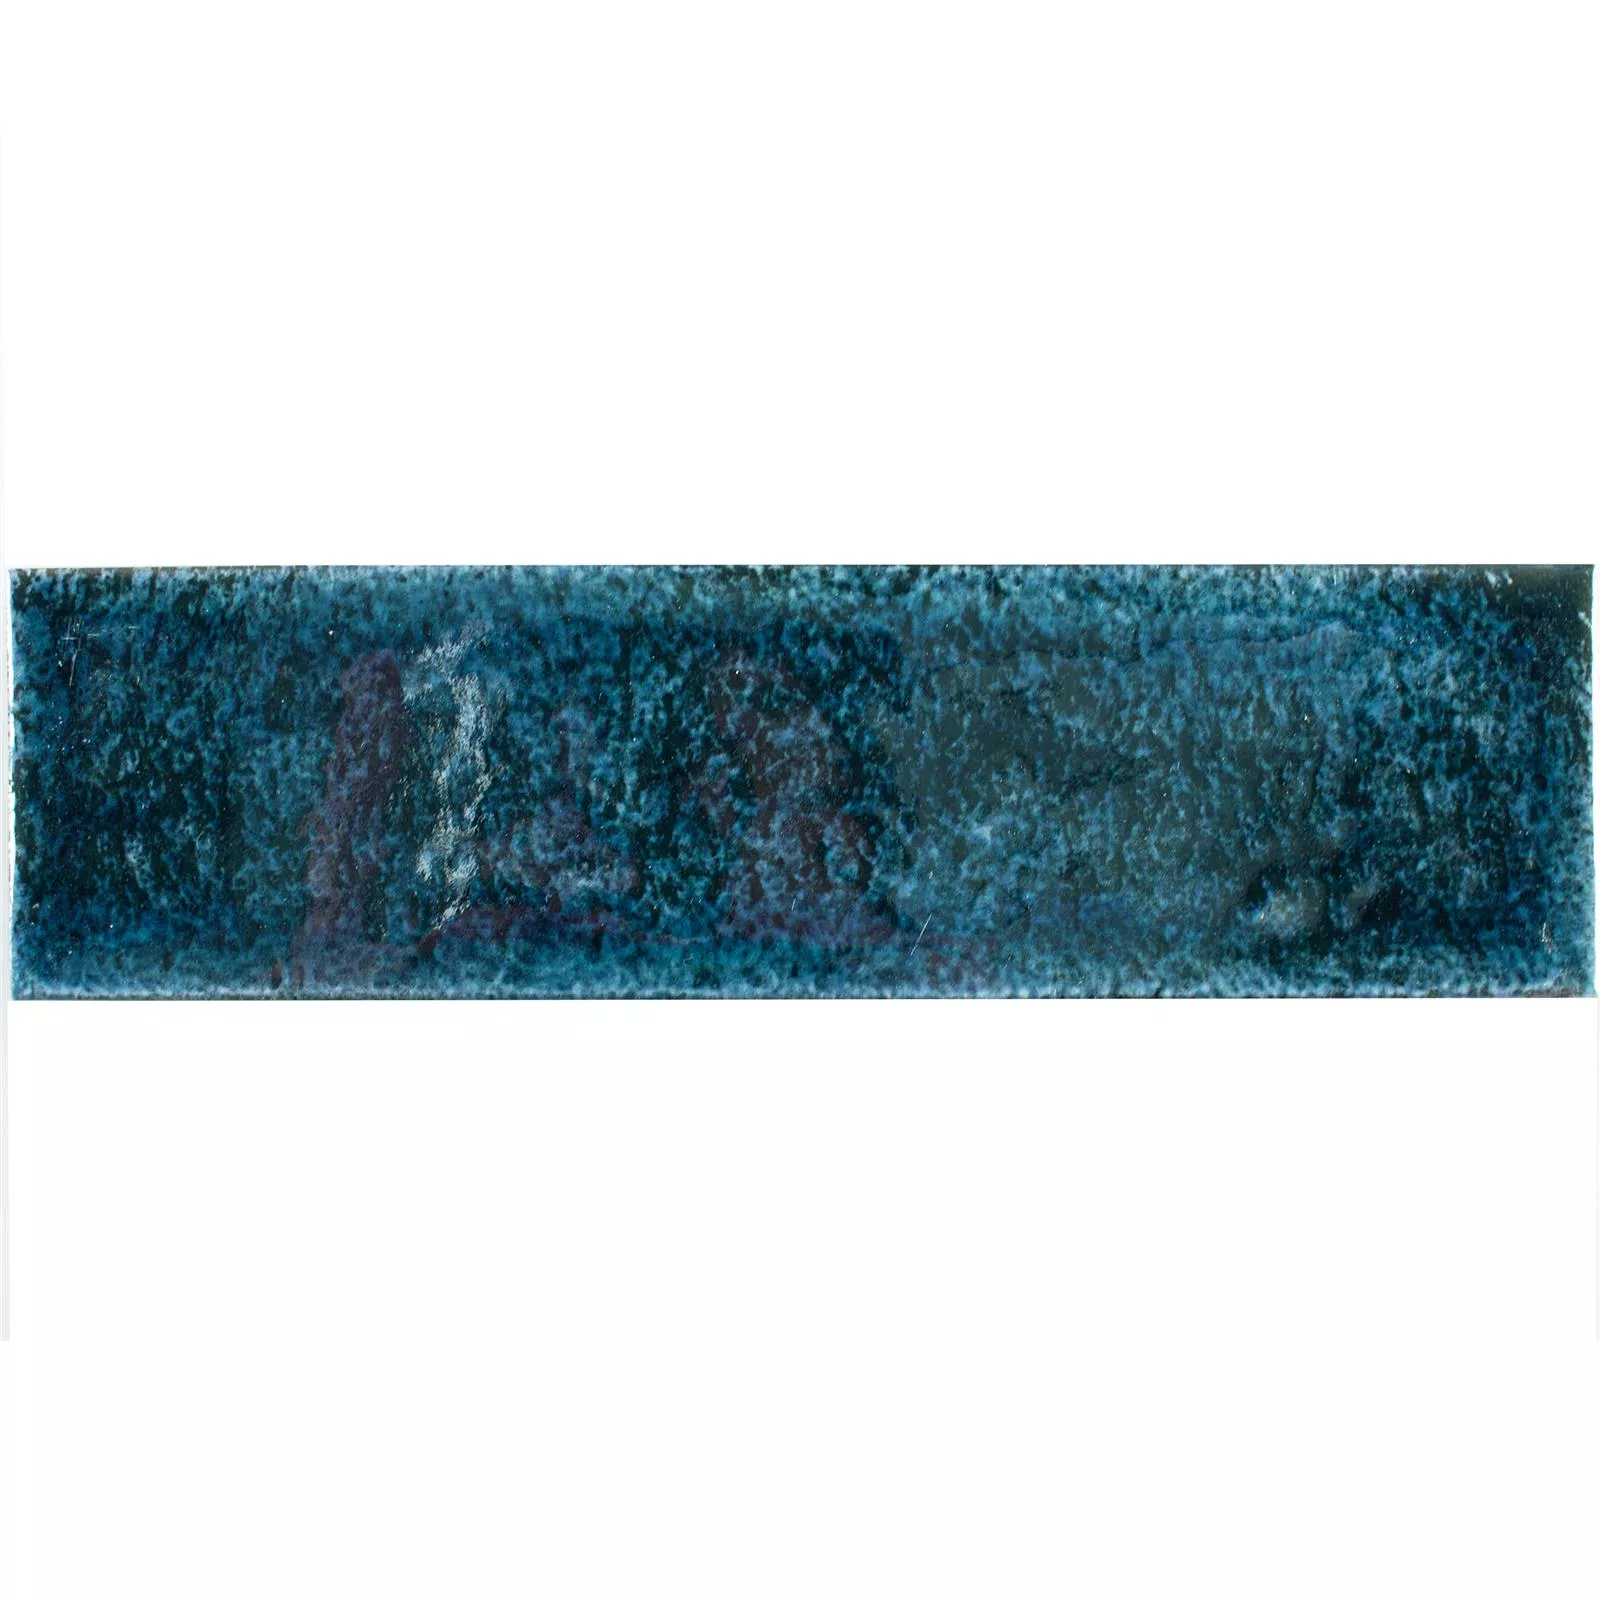 Sample Wandtegels Vanroy Gegolfd 6x24cm Blauw